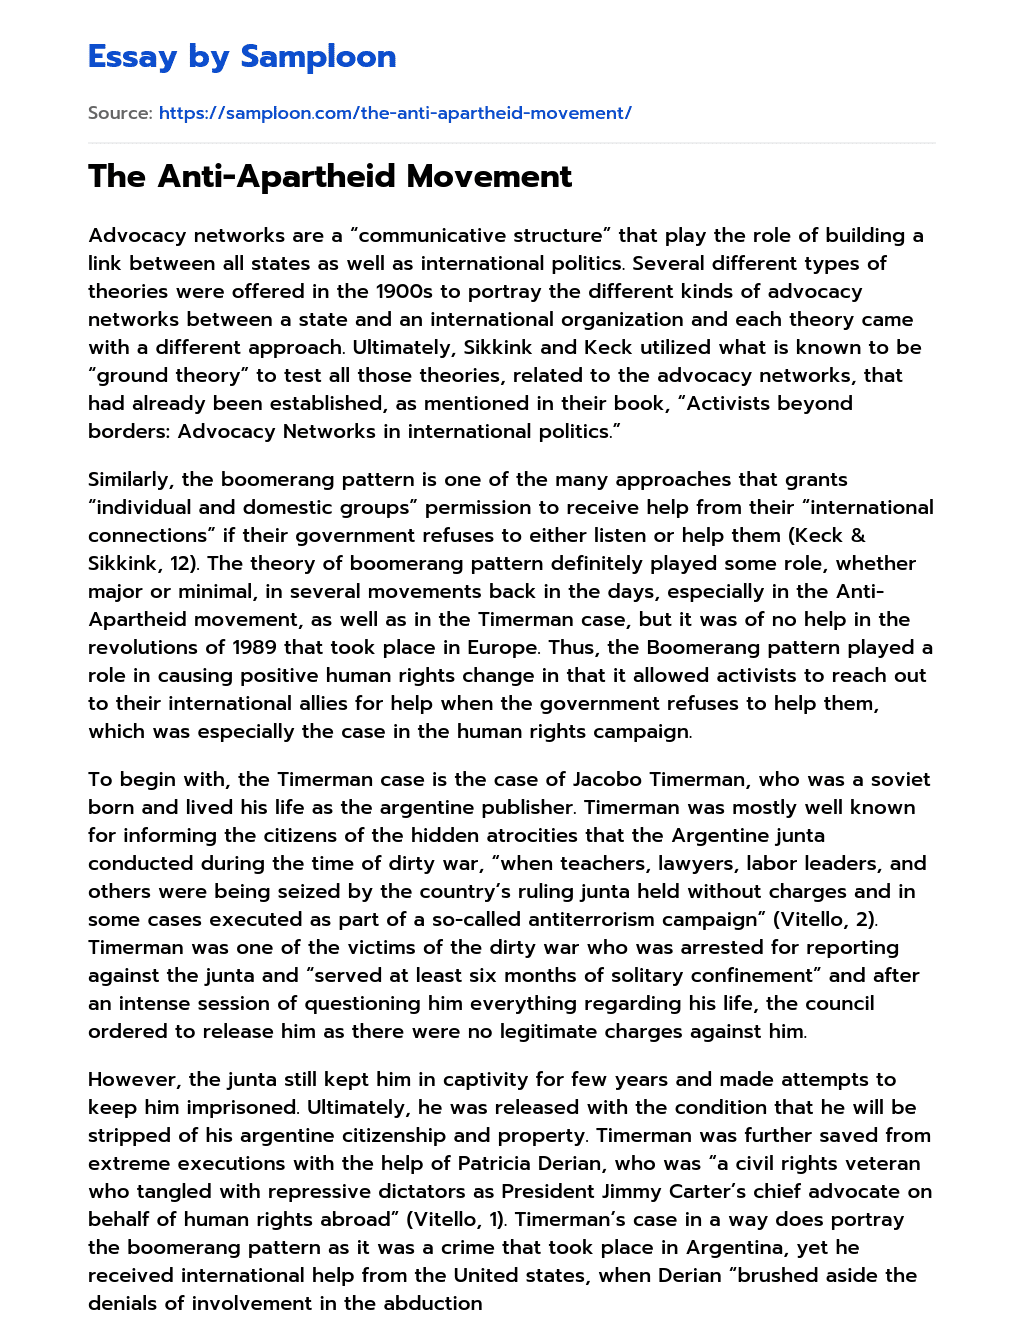 The Anti-Apartheid Movement essay